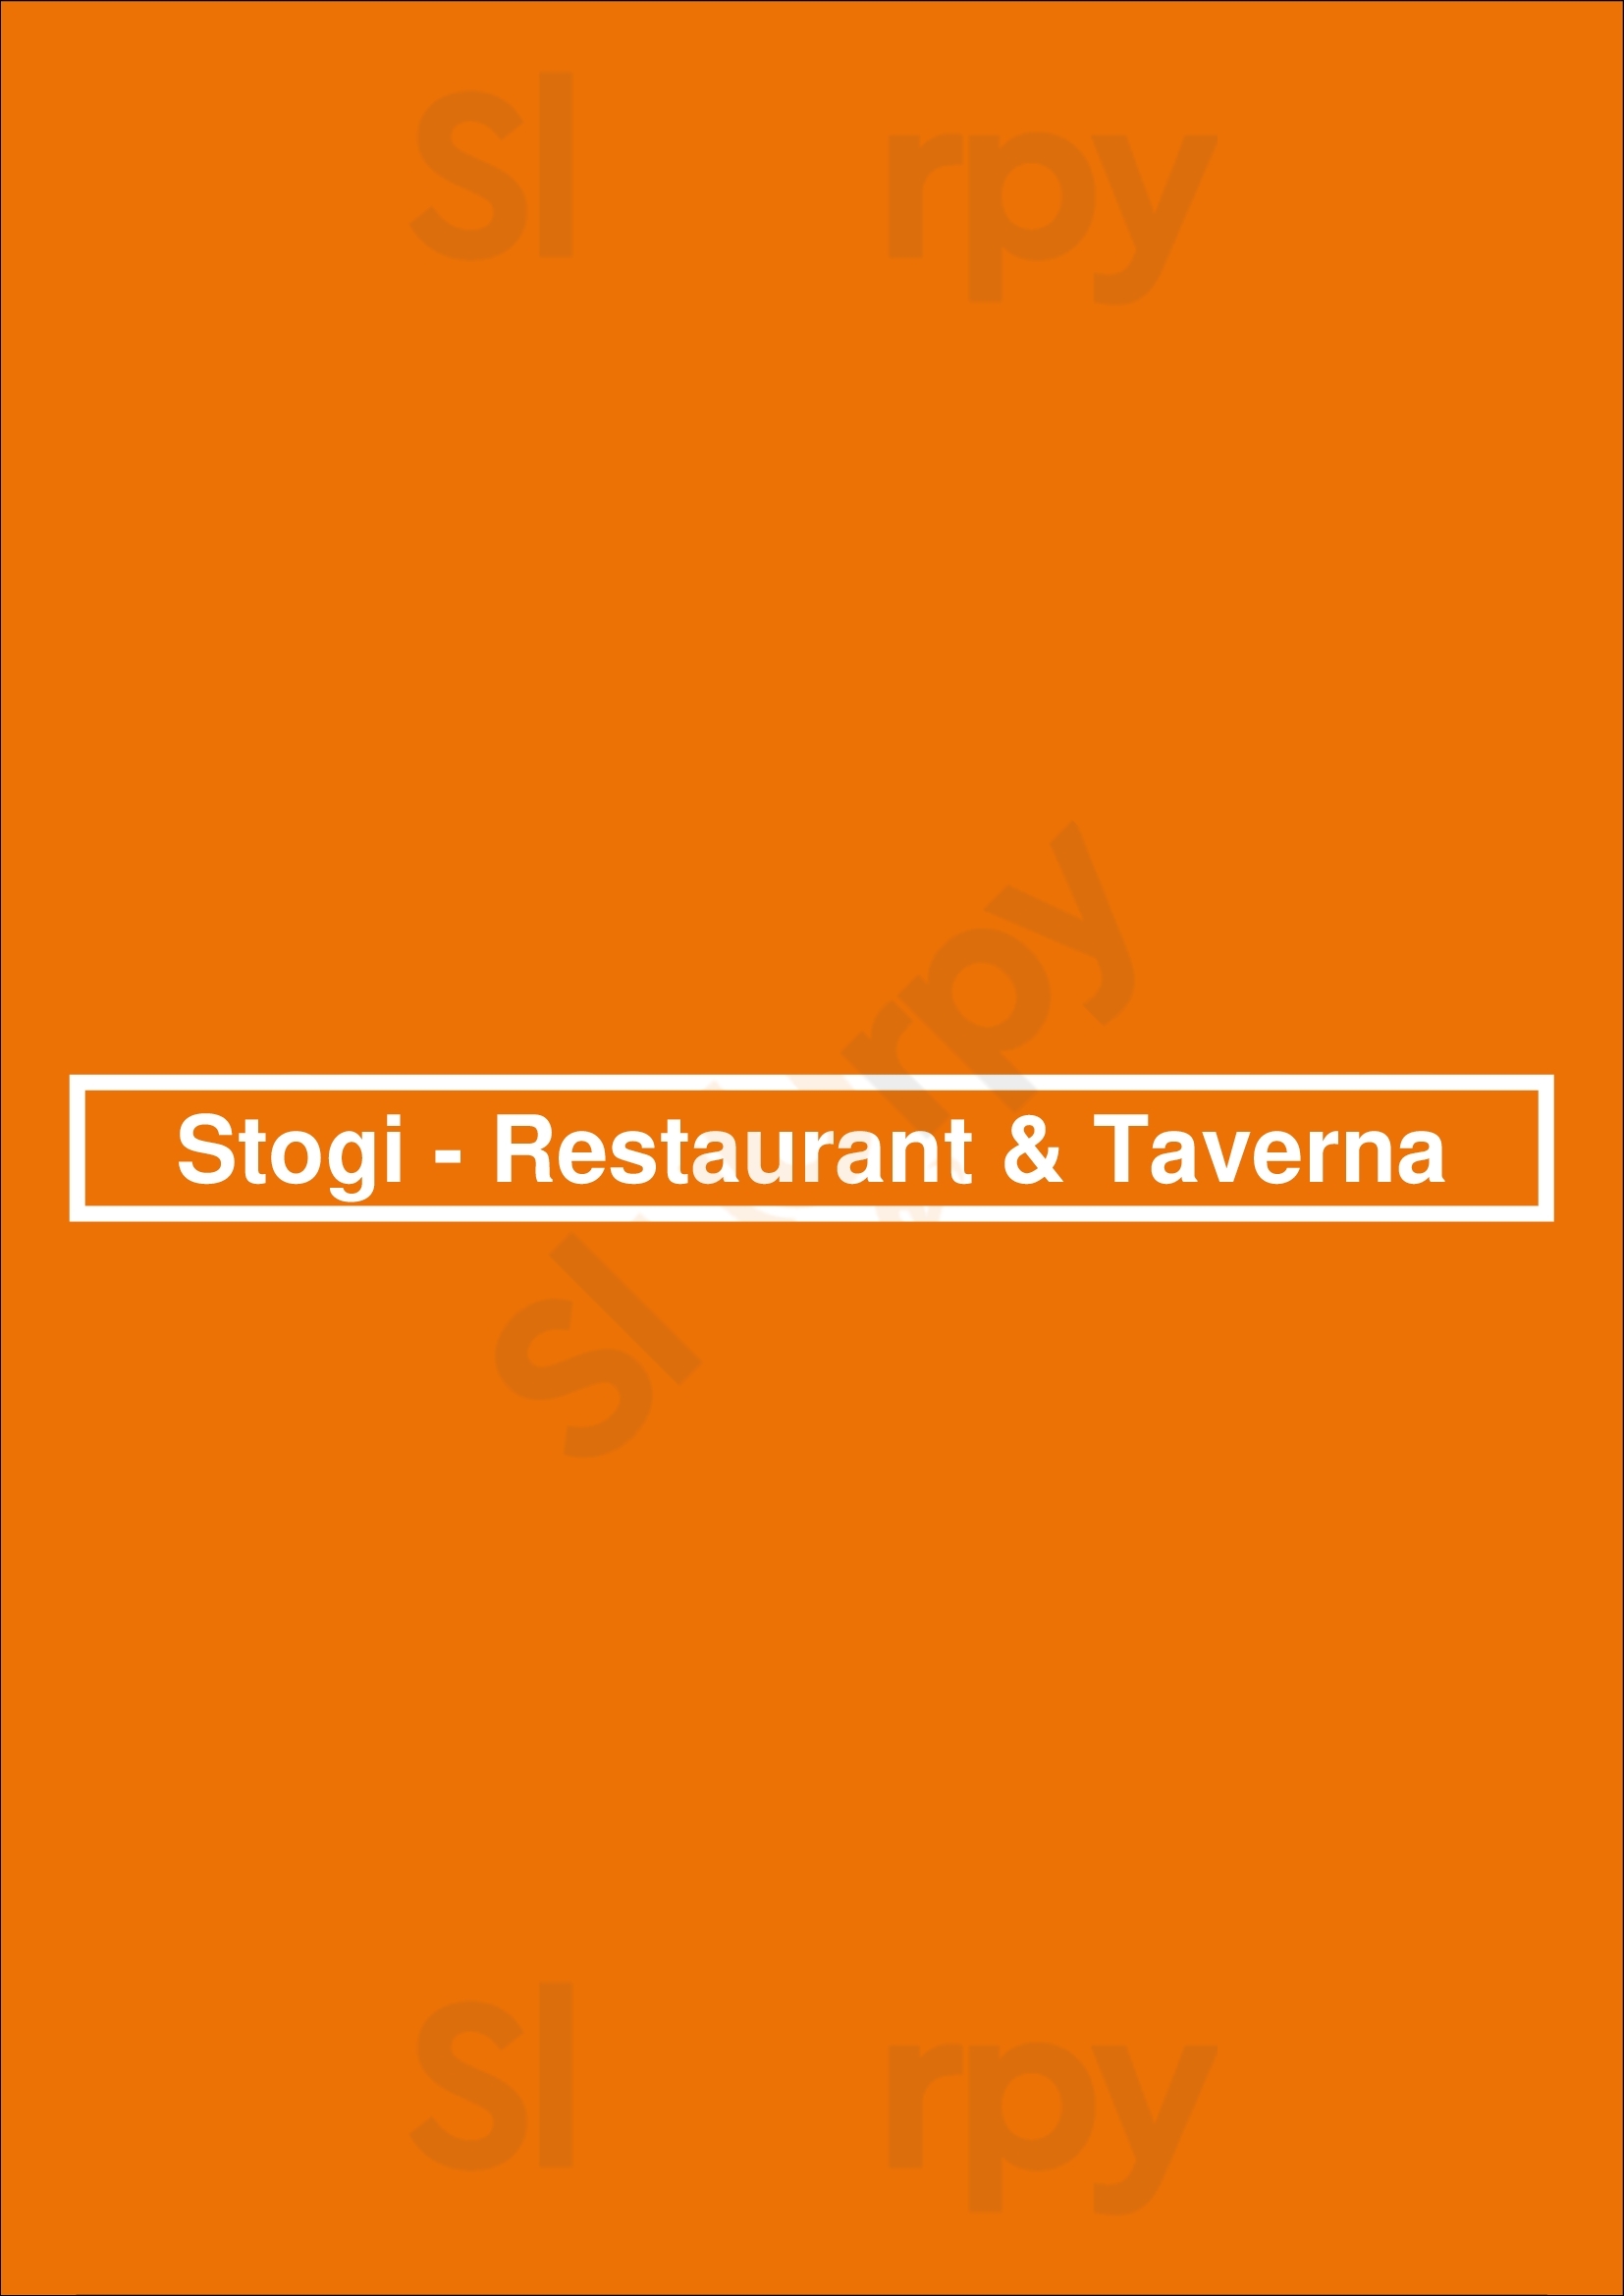 Stogi - Restaurant & Taverna Stuttgart Menu - 1